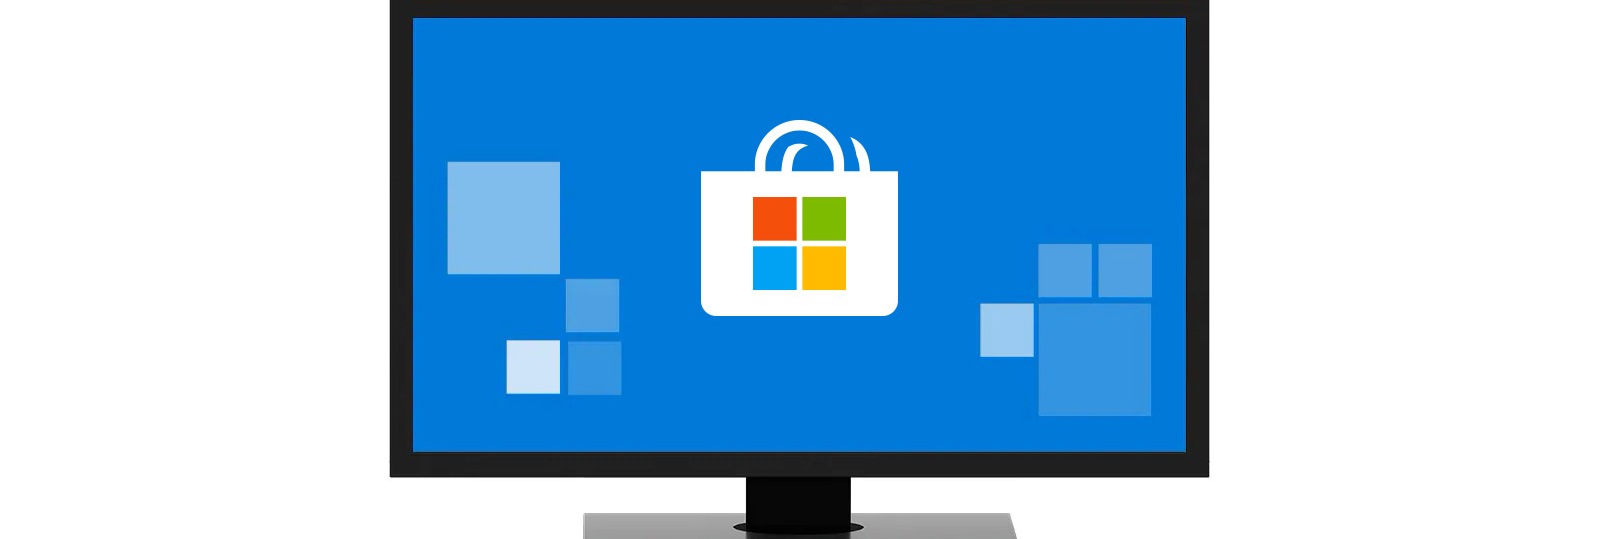 Windows 10 Pc Gaming Microsoft - rt 1337 green roblox